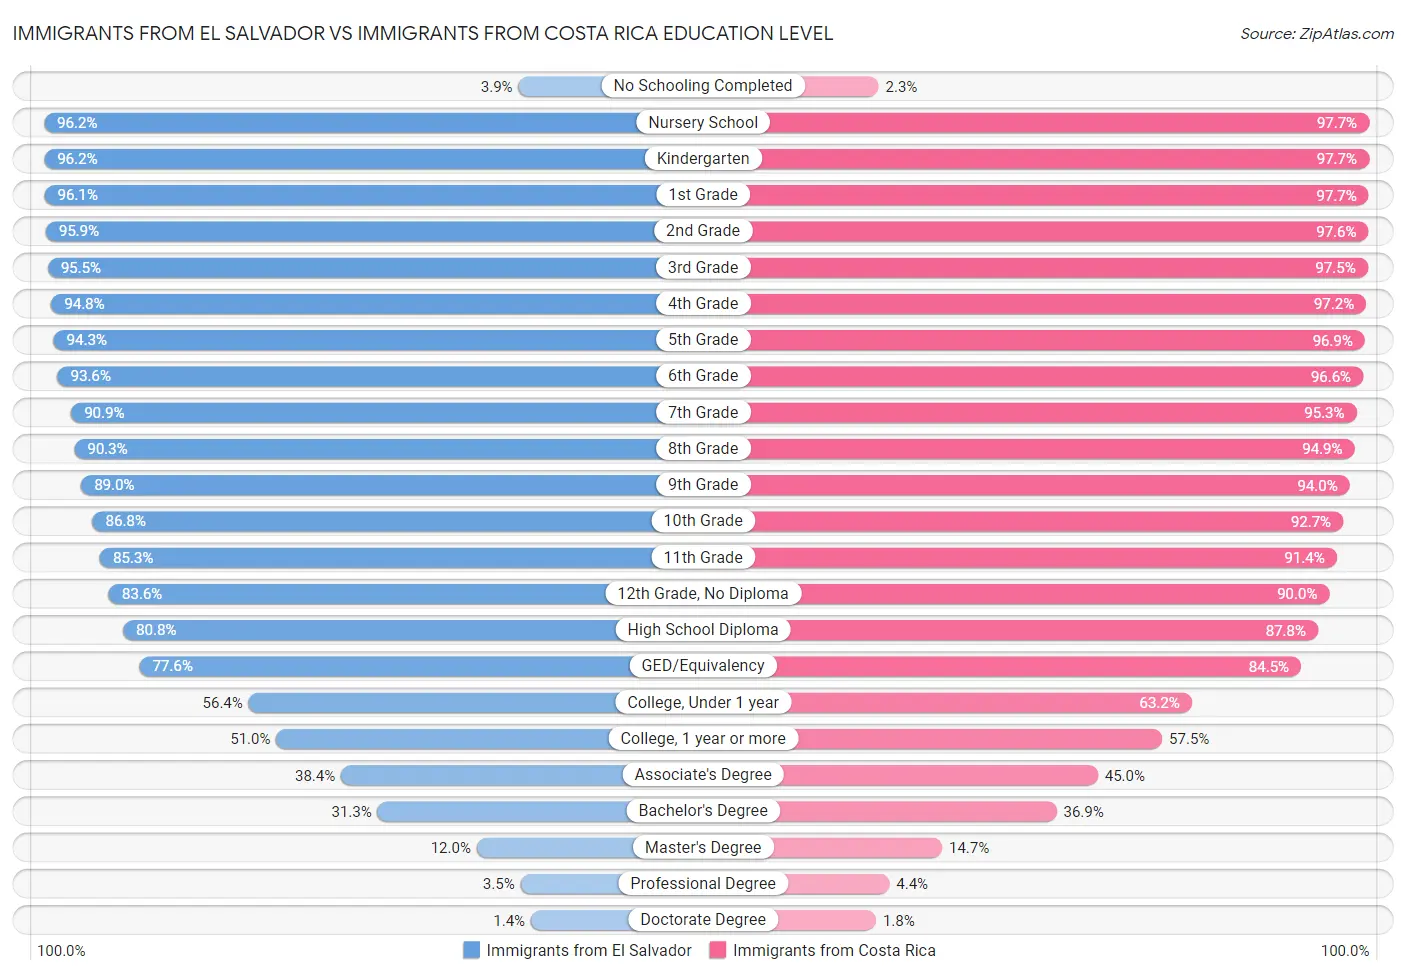 Immigrants from El Salvador vs Immigrants from Costa Rica Education Level